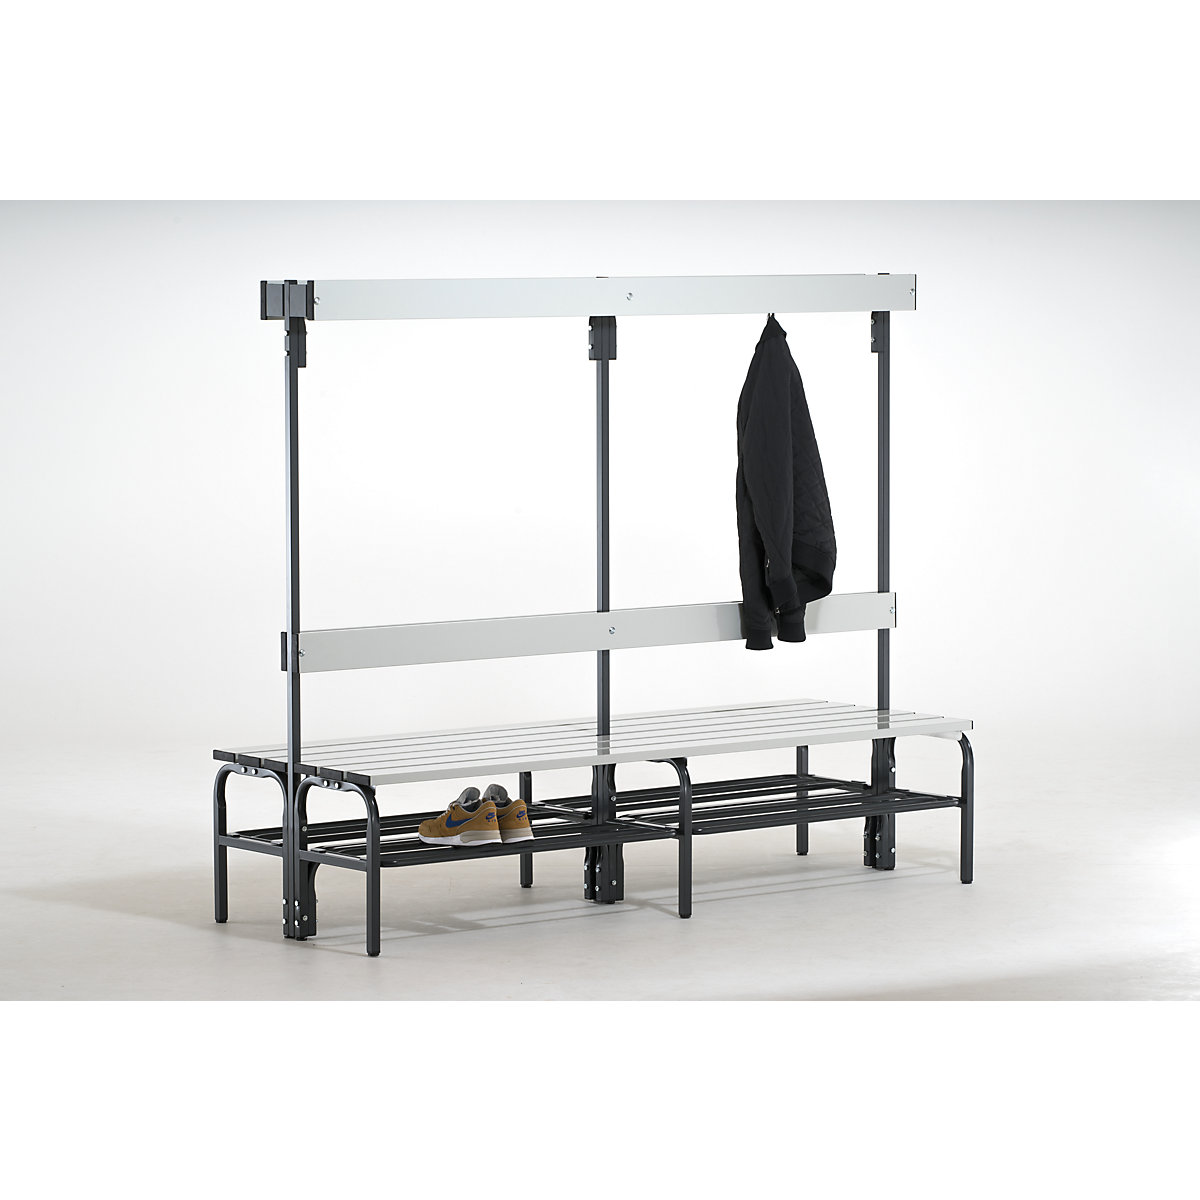 Sypro – Changing room bench with aluminium slats (Product illustration 10)